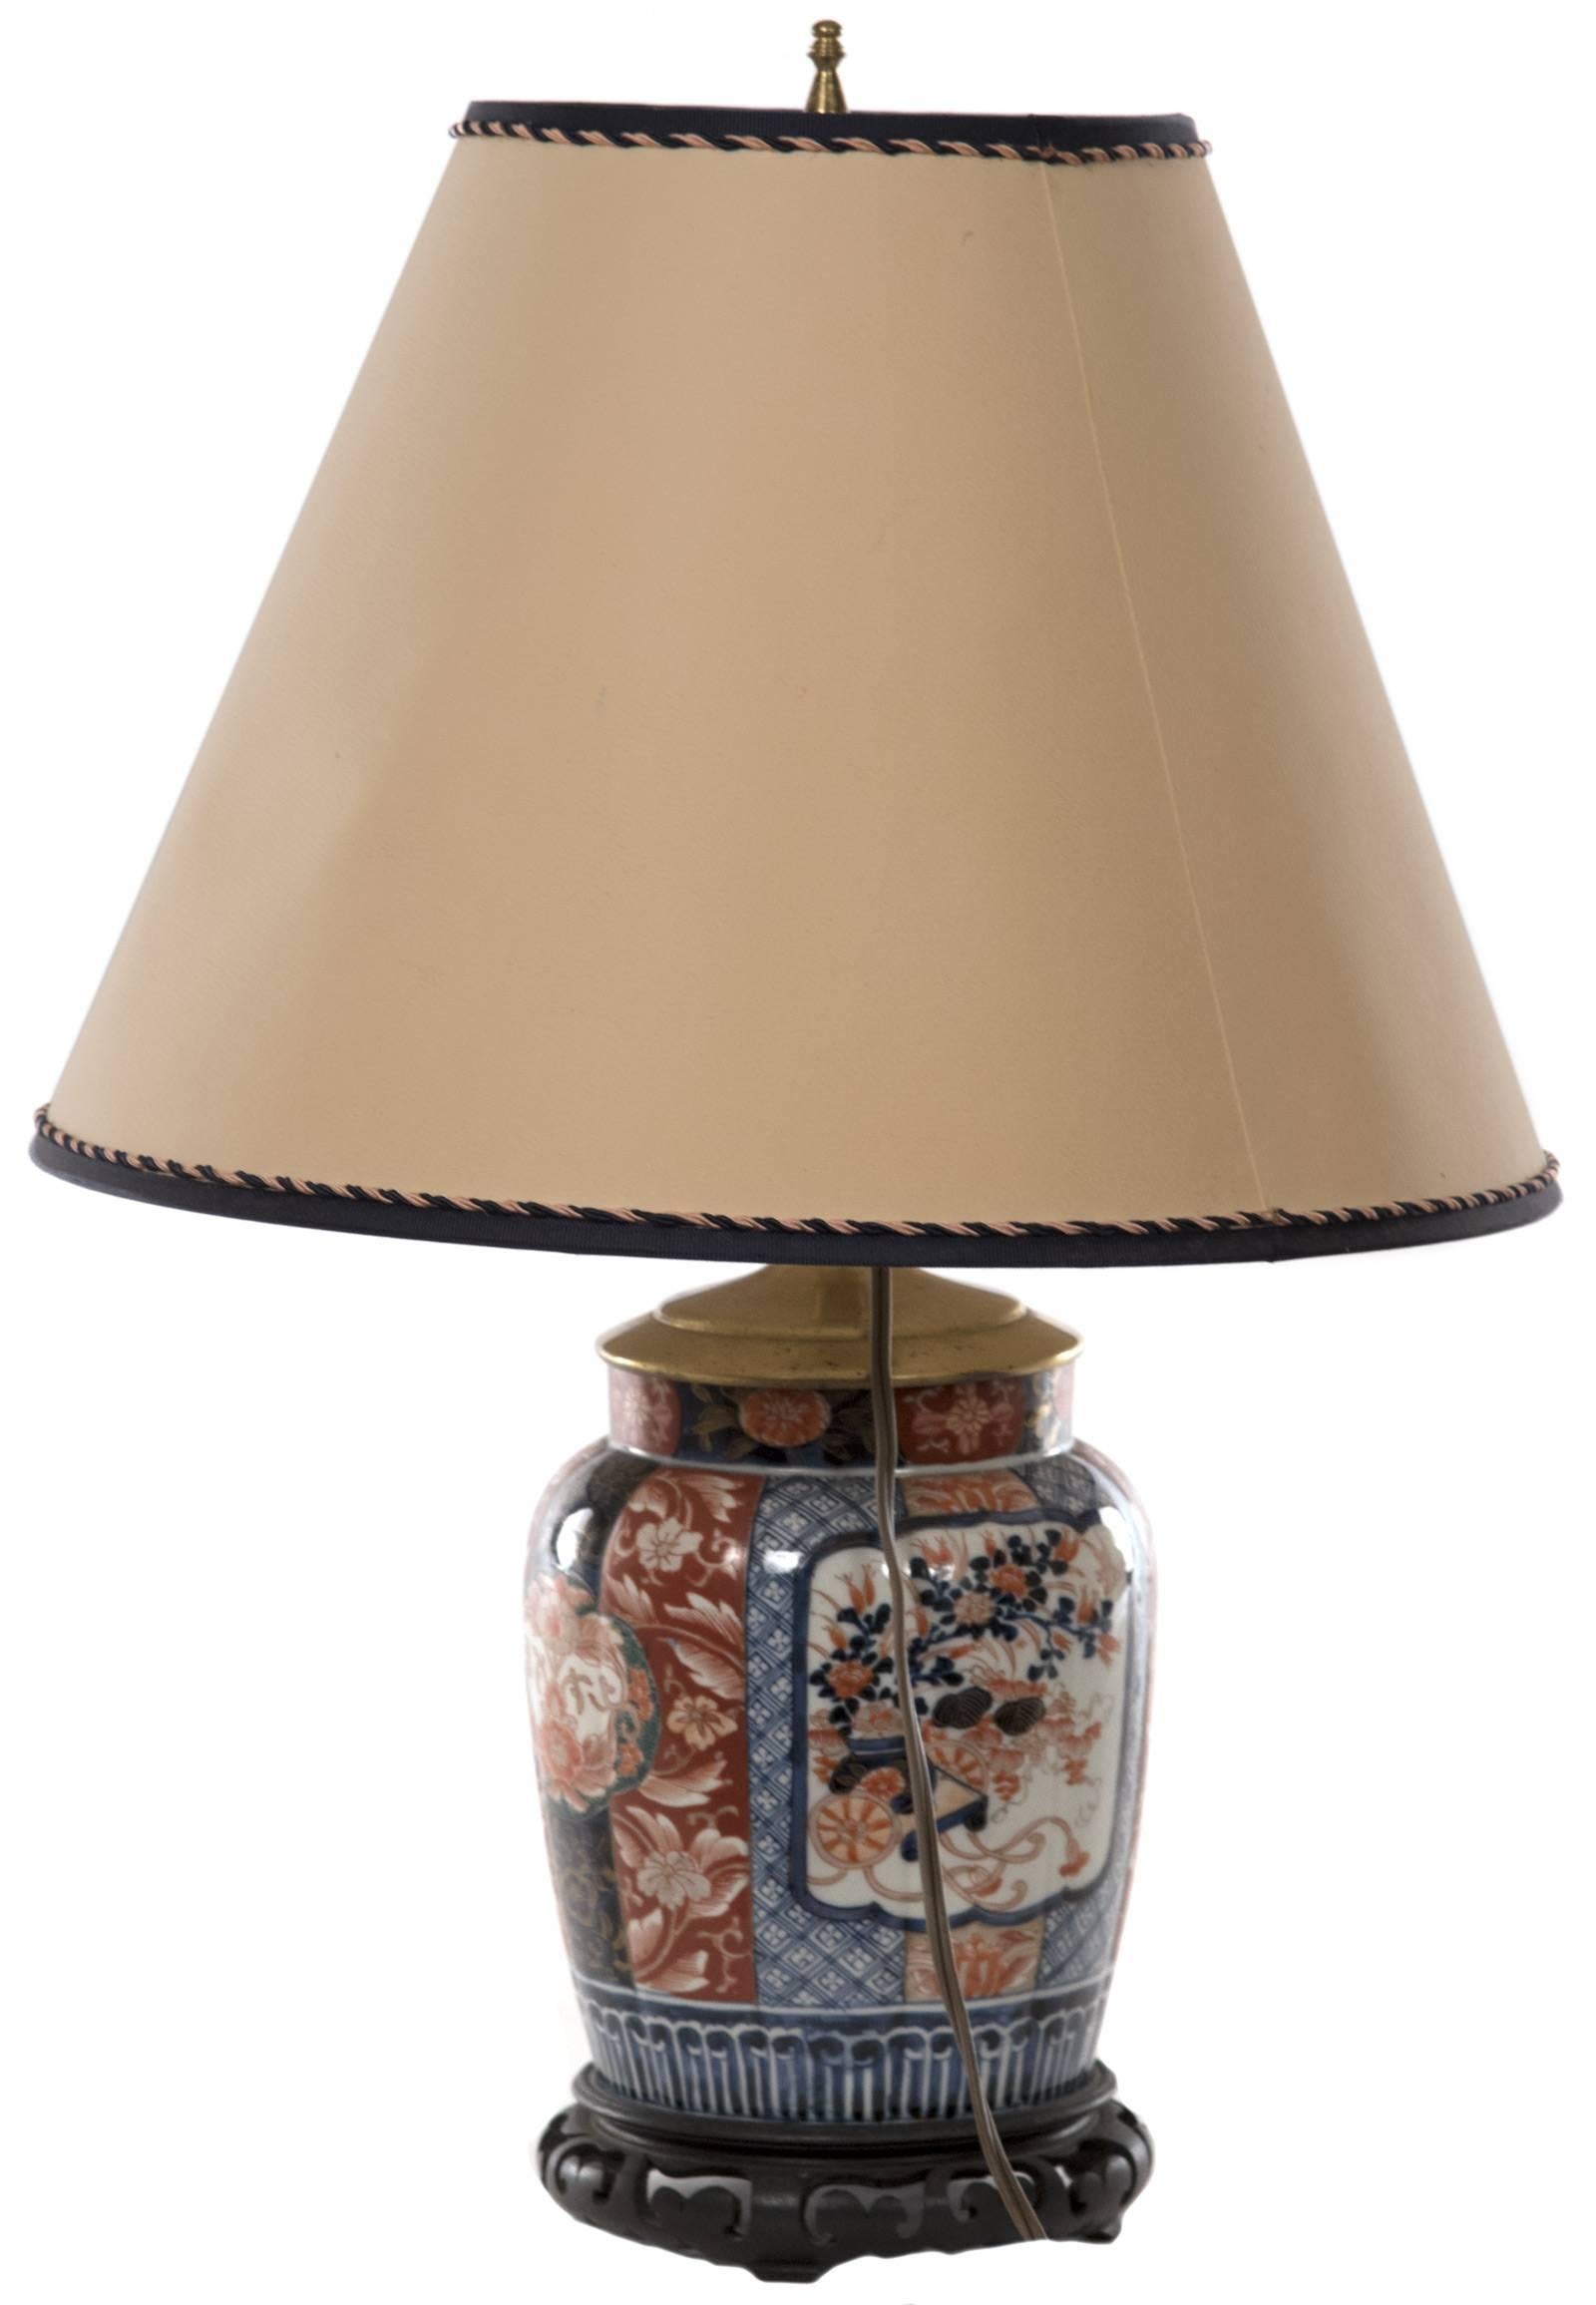 Japonisme 19th Century Japanese Imari Ovoid Porcelain Urn Table Lamp